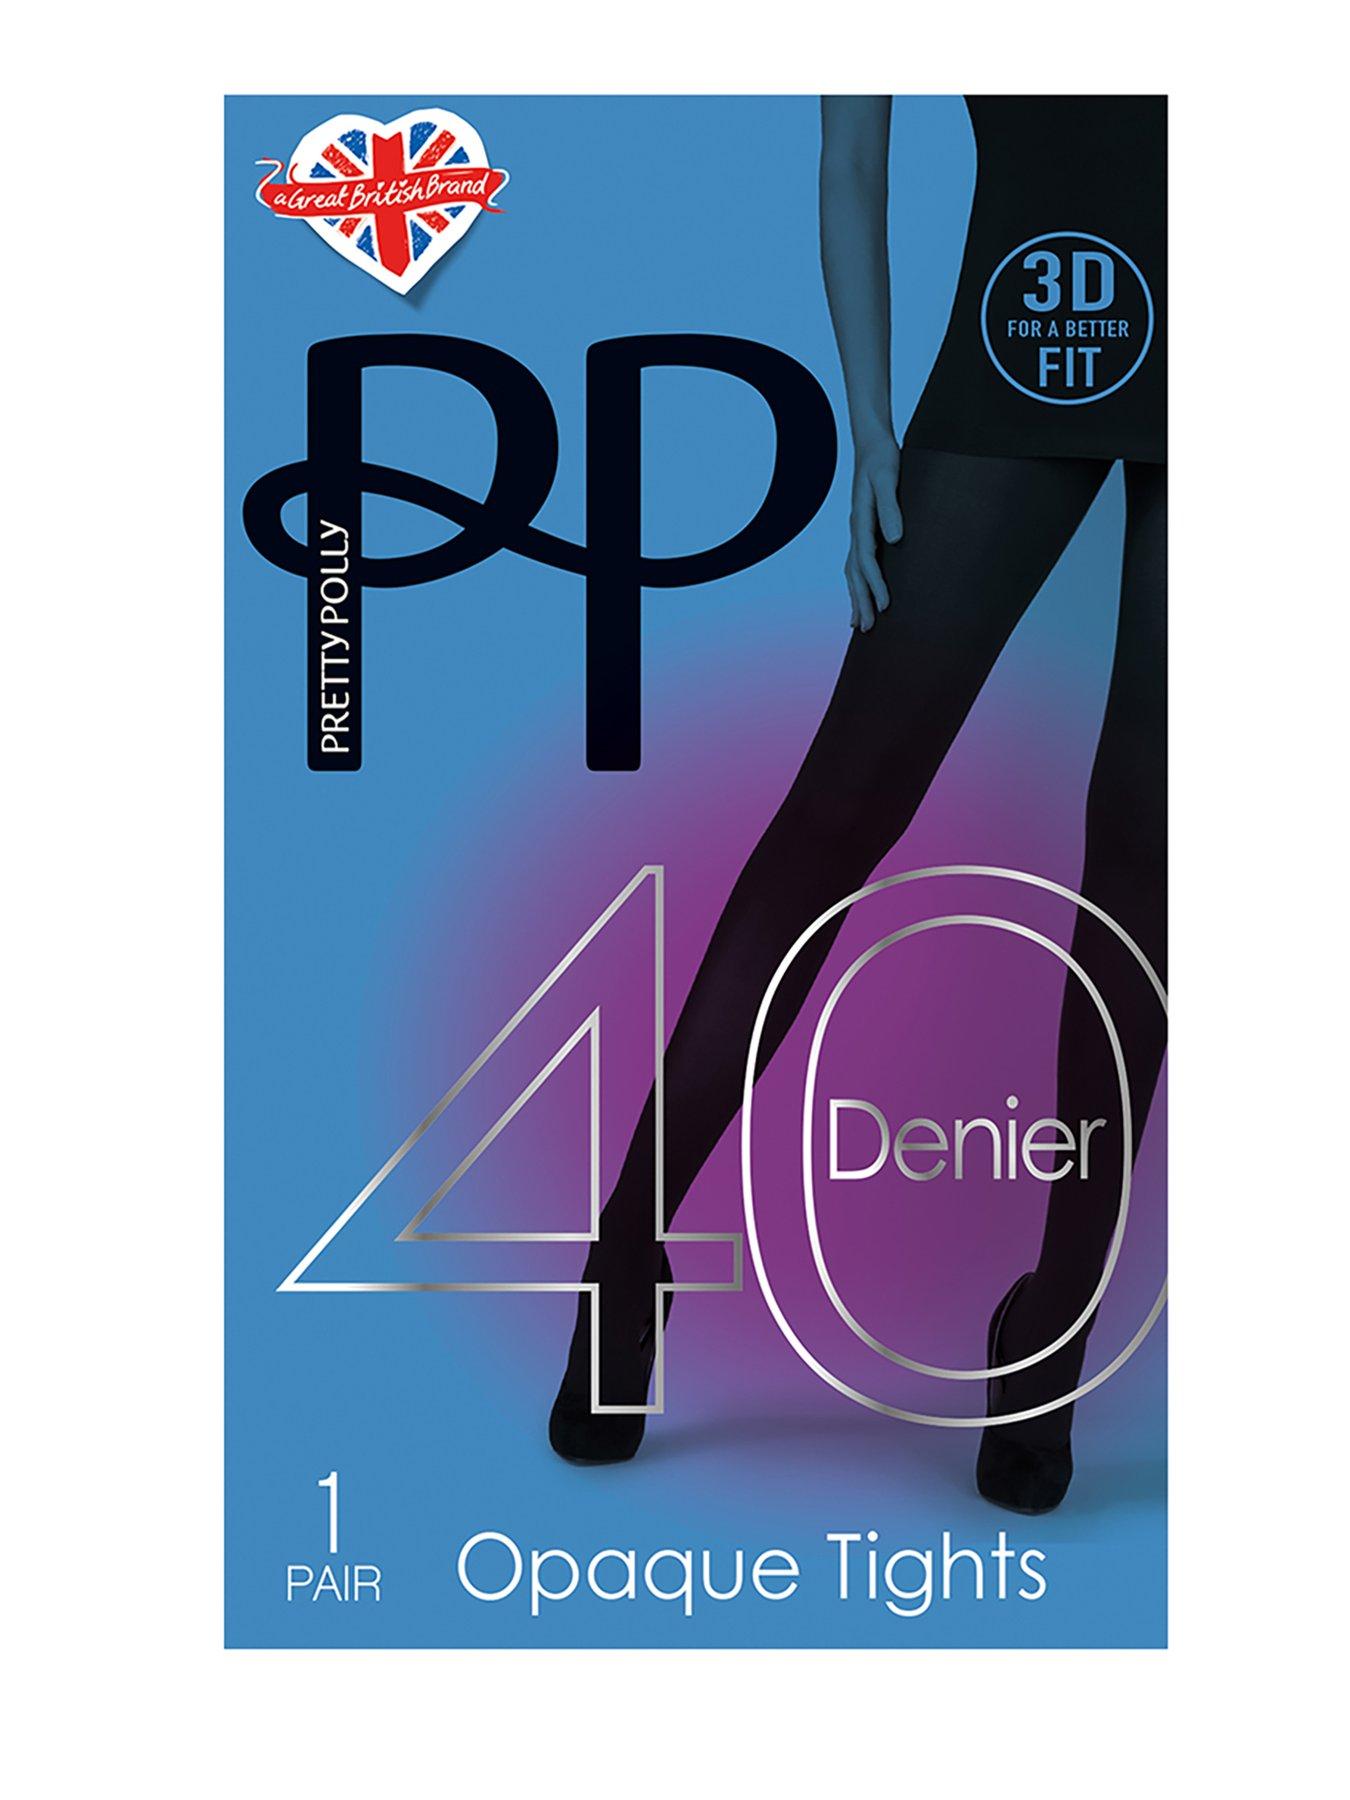 2 Pack 40 Denier Opaque Tights - Black